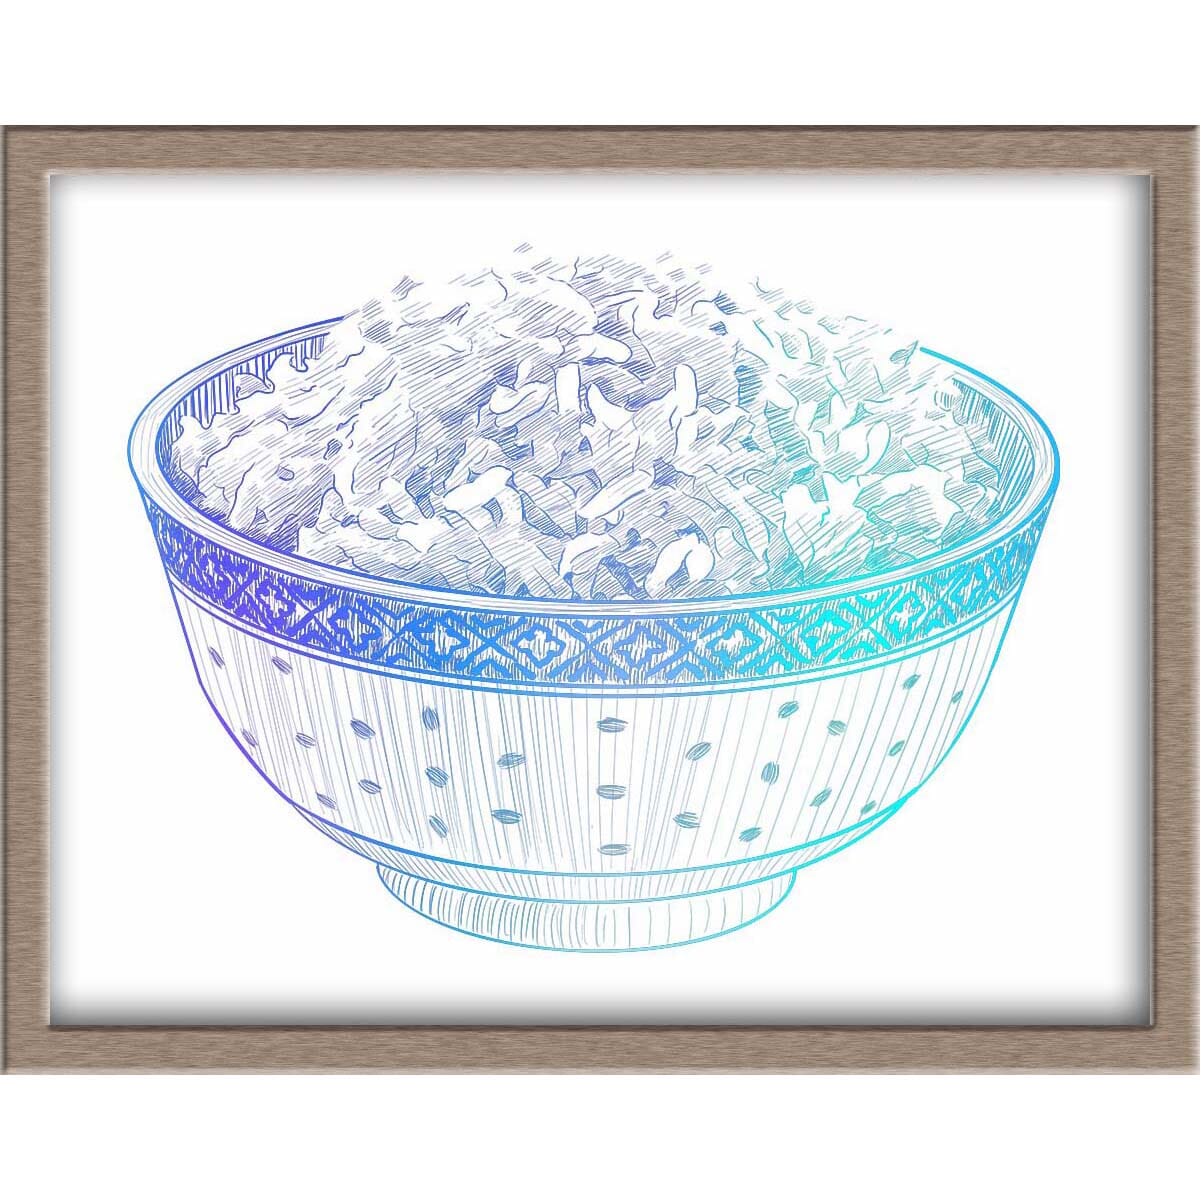 Bowl of Rice Foiled Print Posters, Prints, & Visual Artwork JoyousJoyfulJoyness 